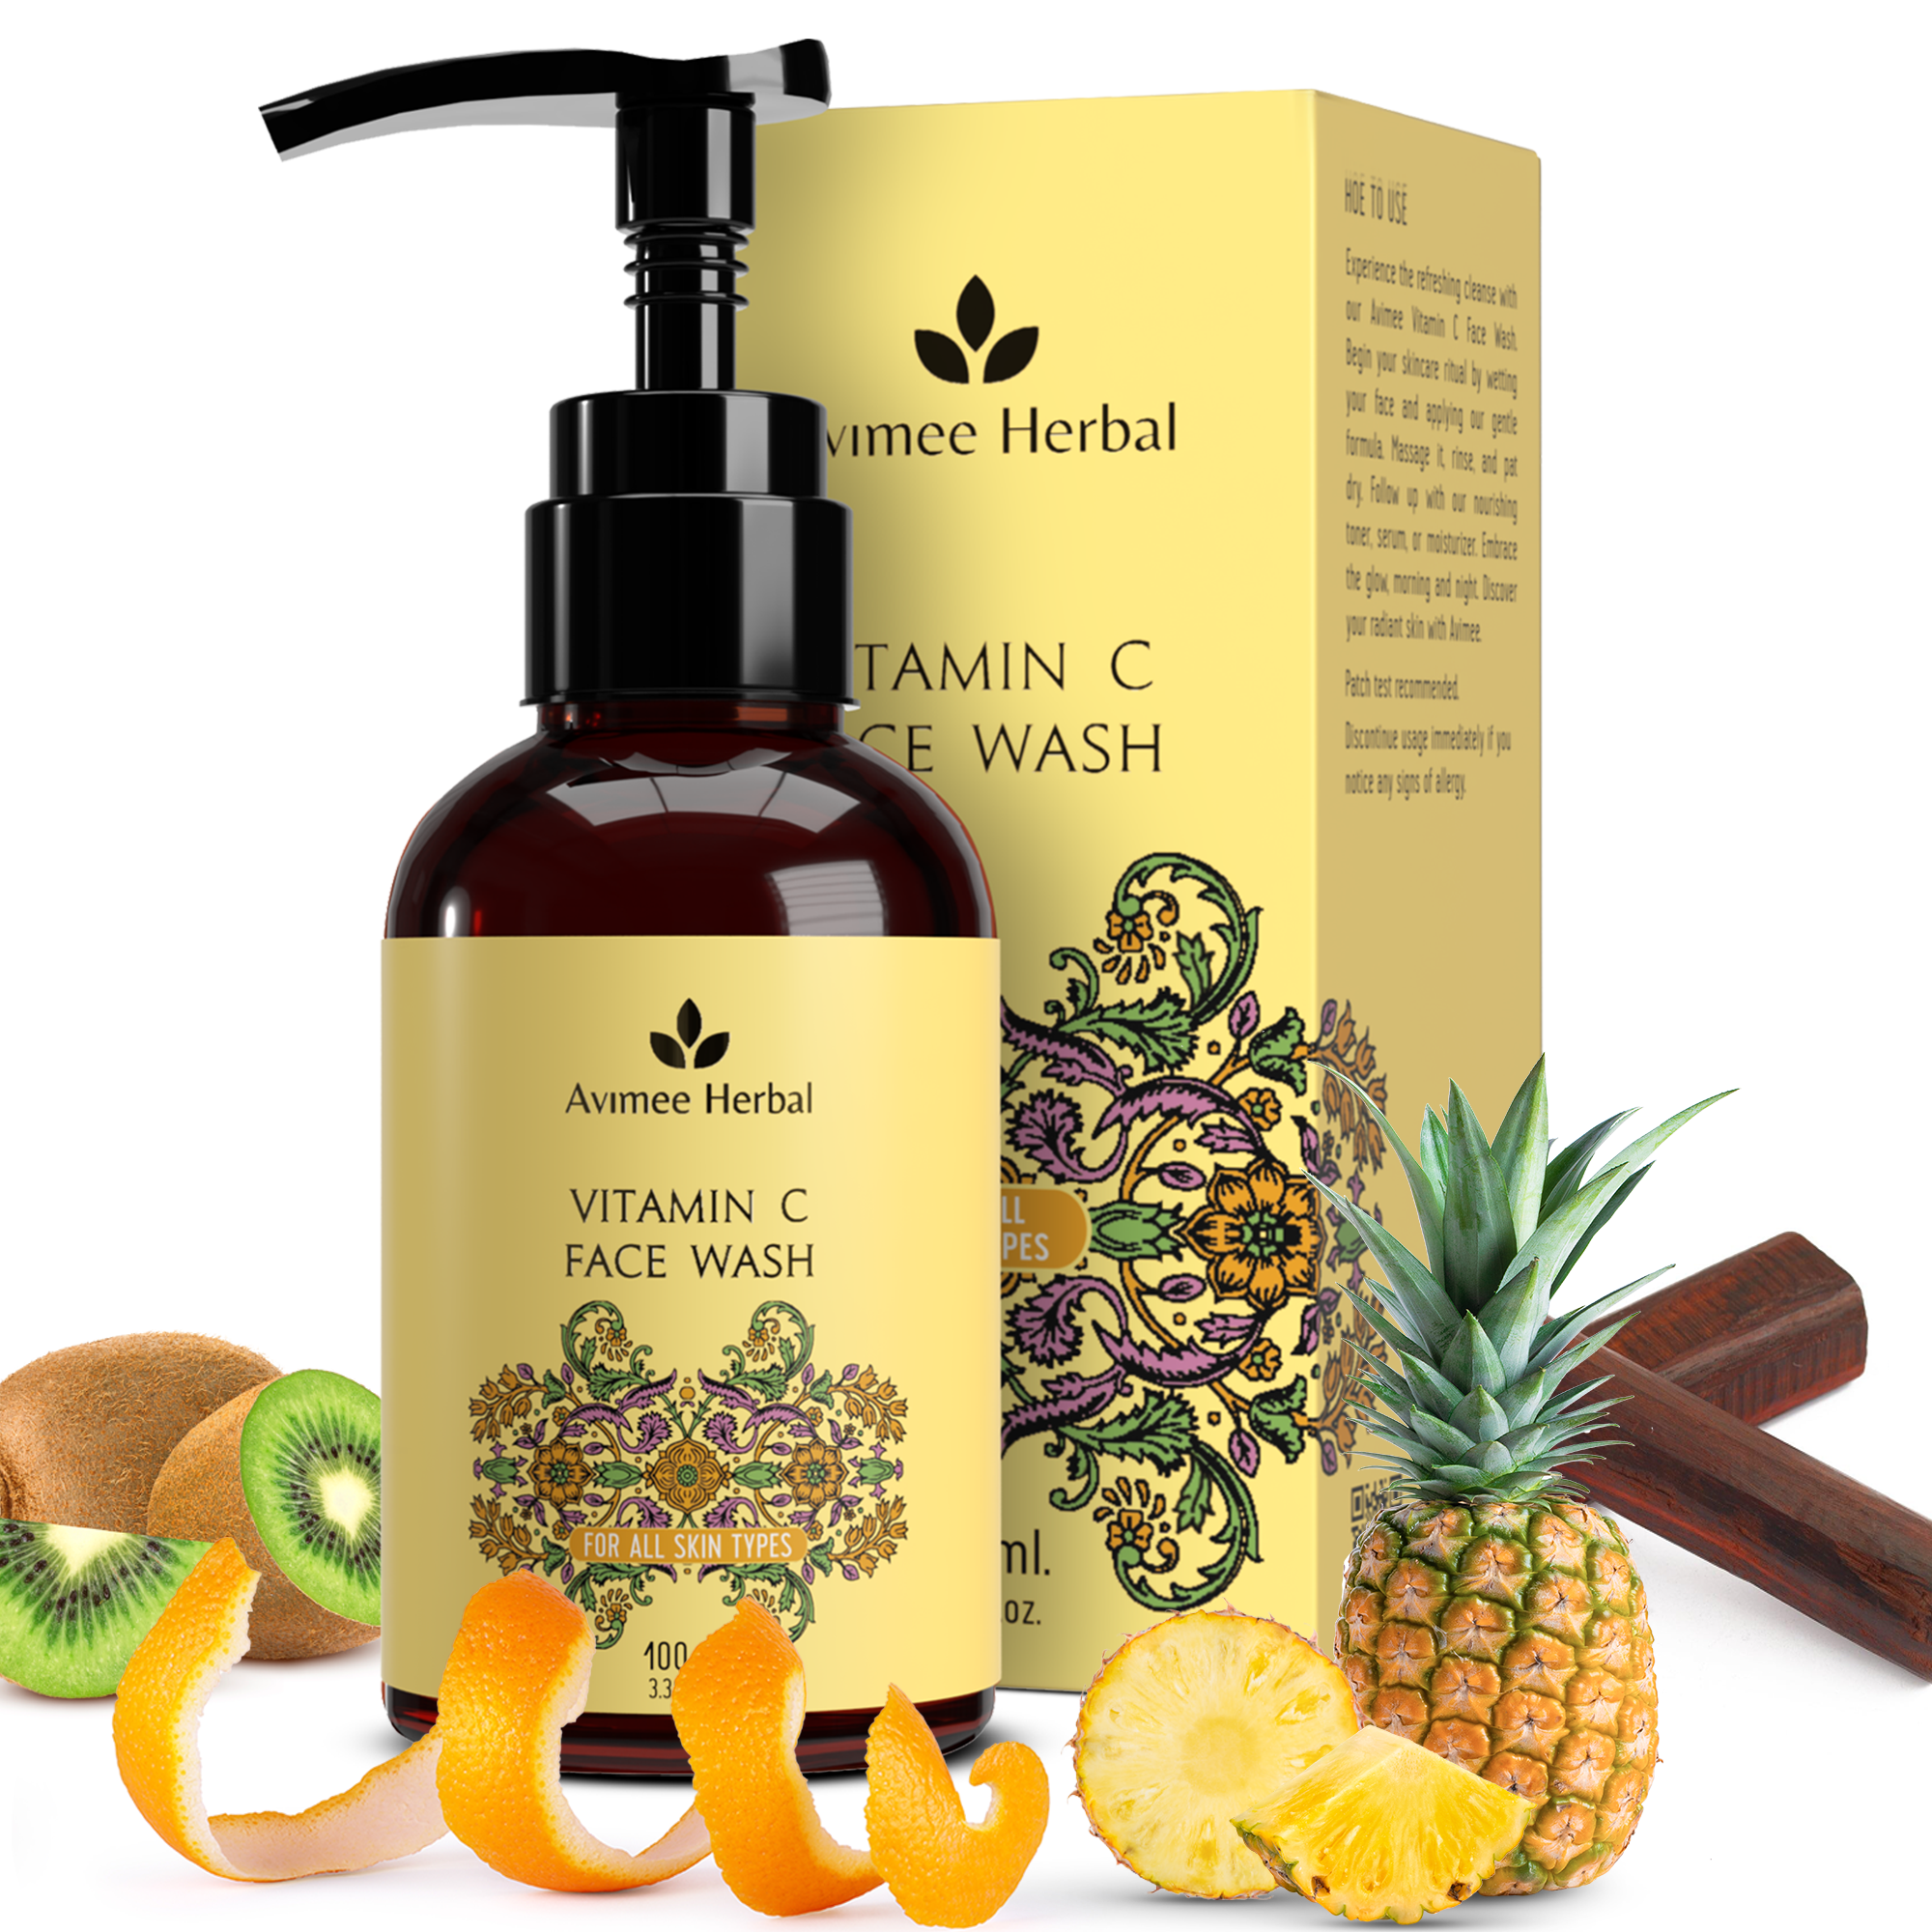 Buy Vitamin C Face Wash online